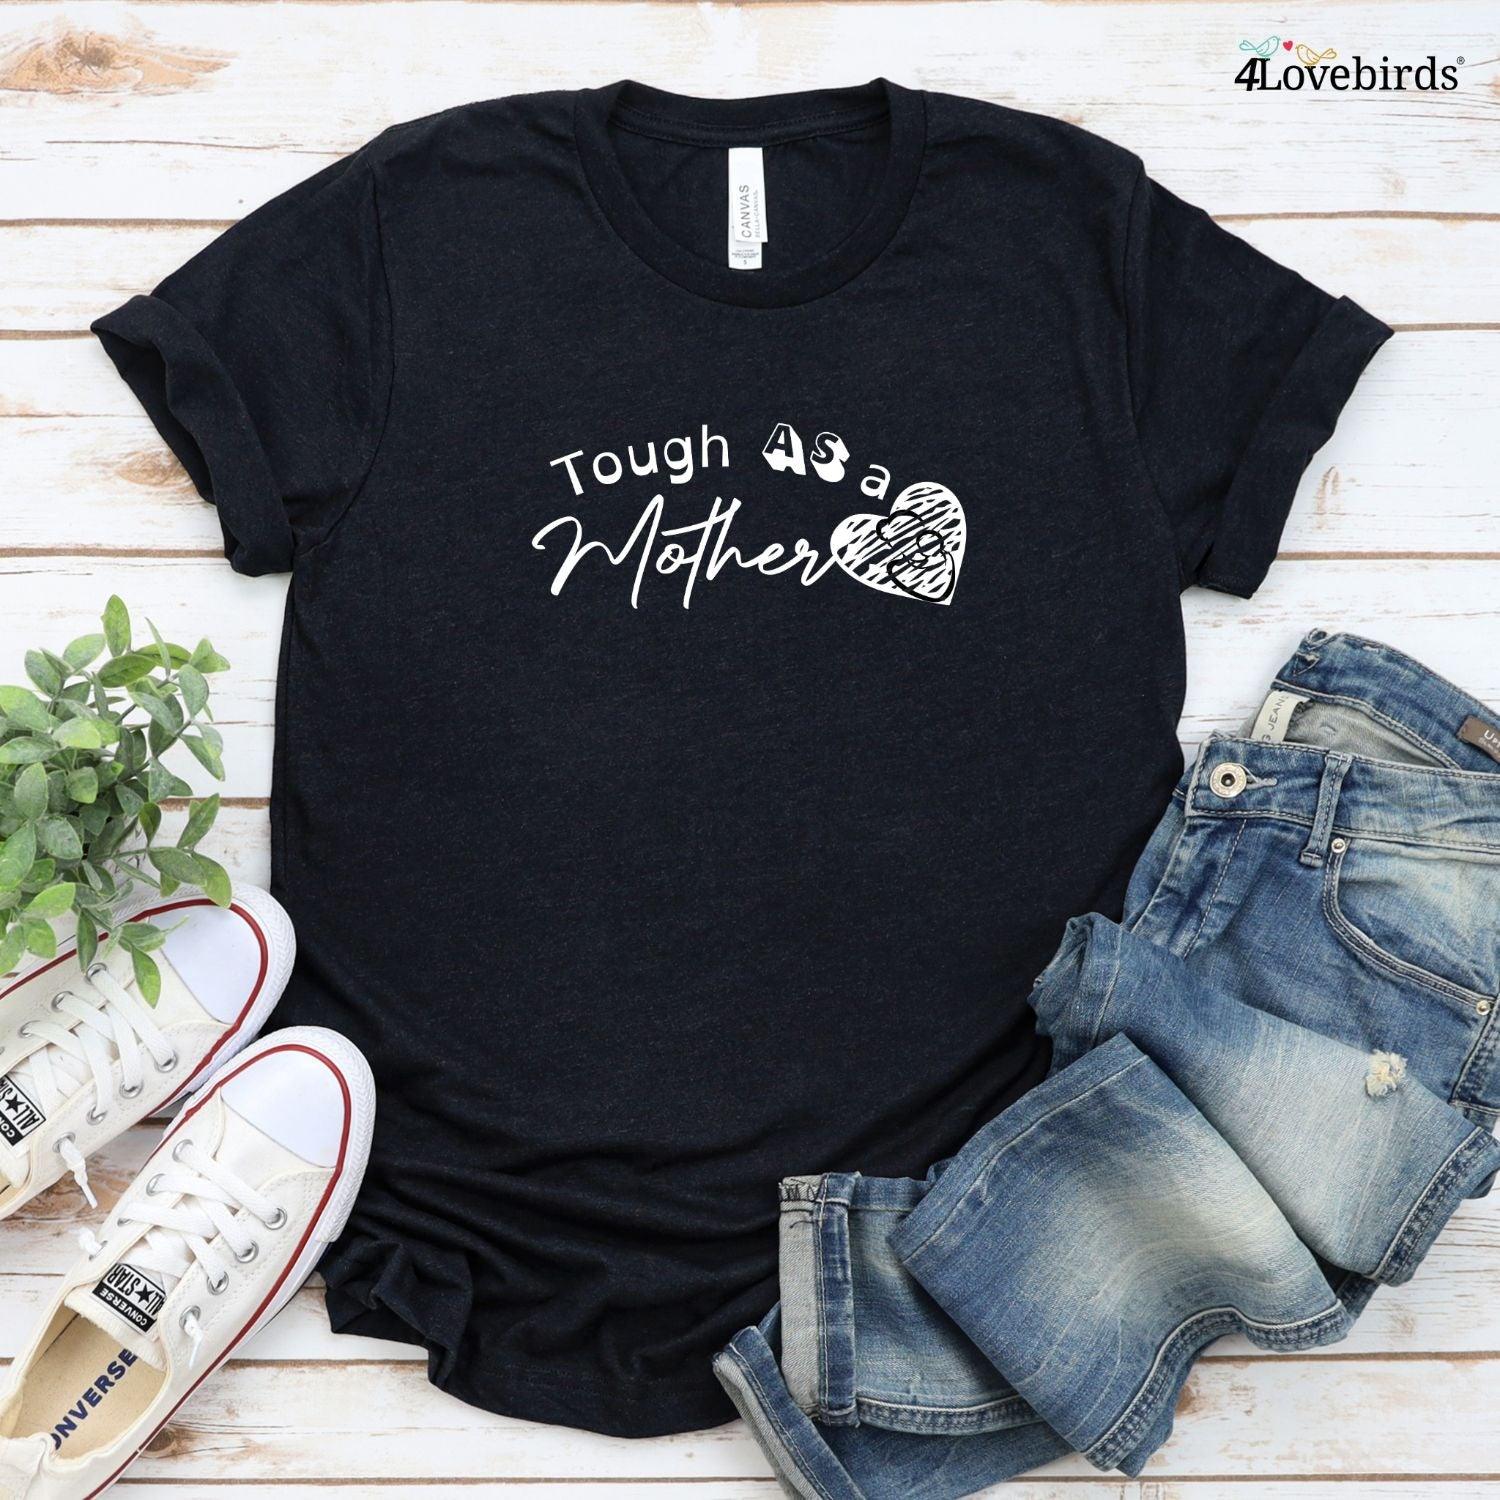 Matching Set for Tough Moms: Hoodie, Shirt, Tee & More! - 4Lovebirds